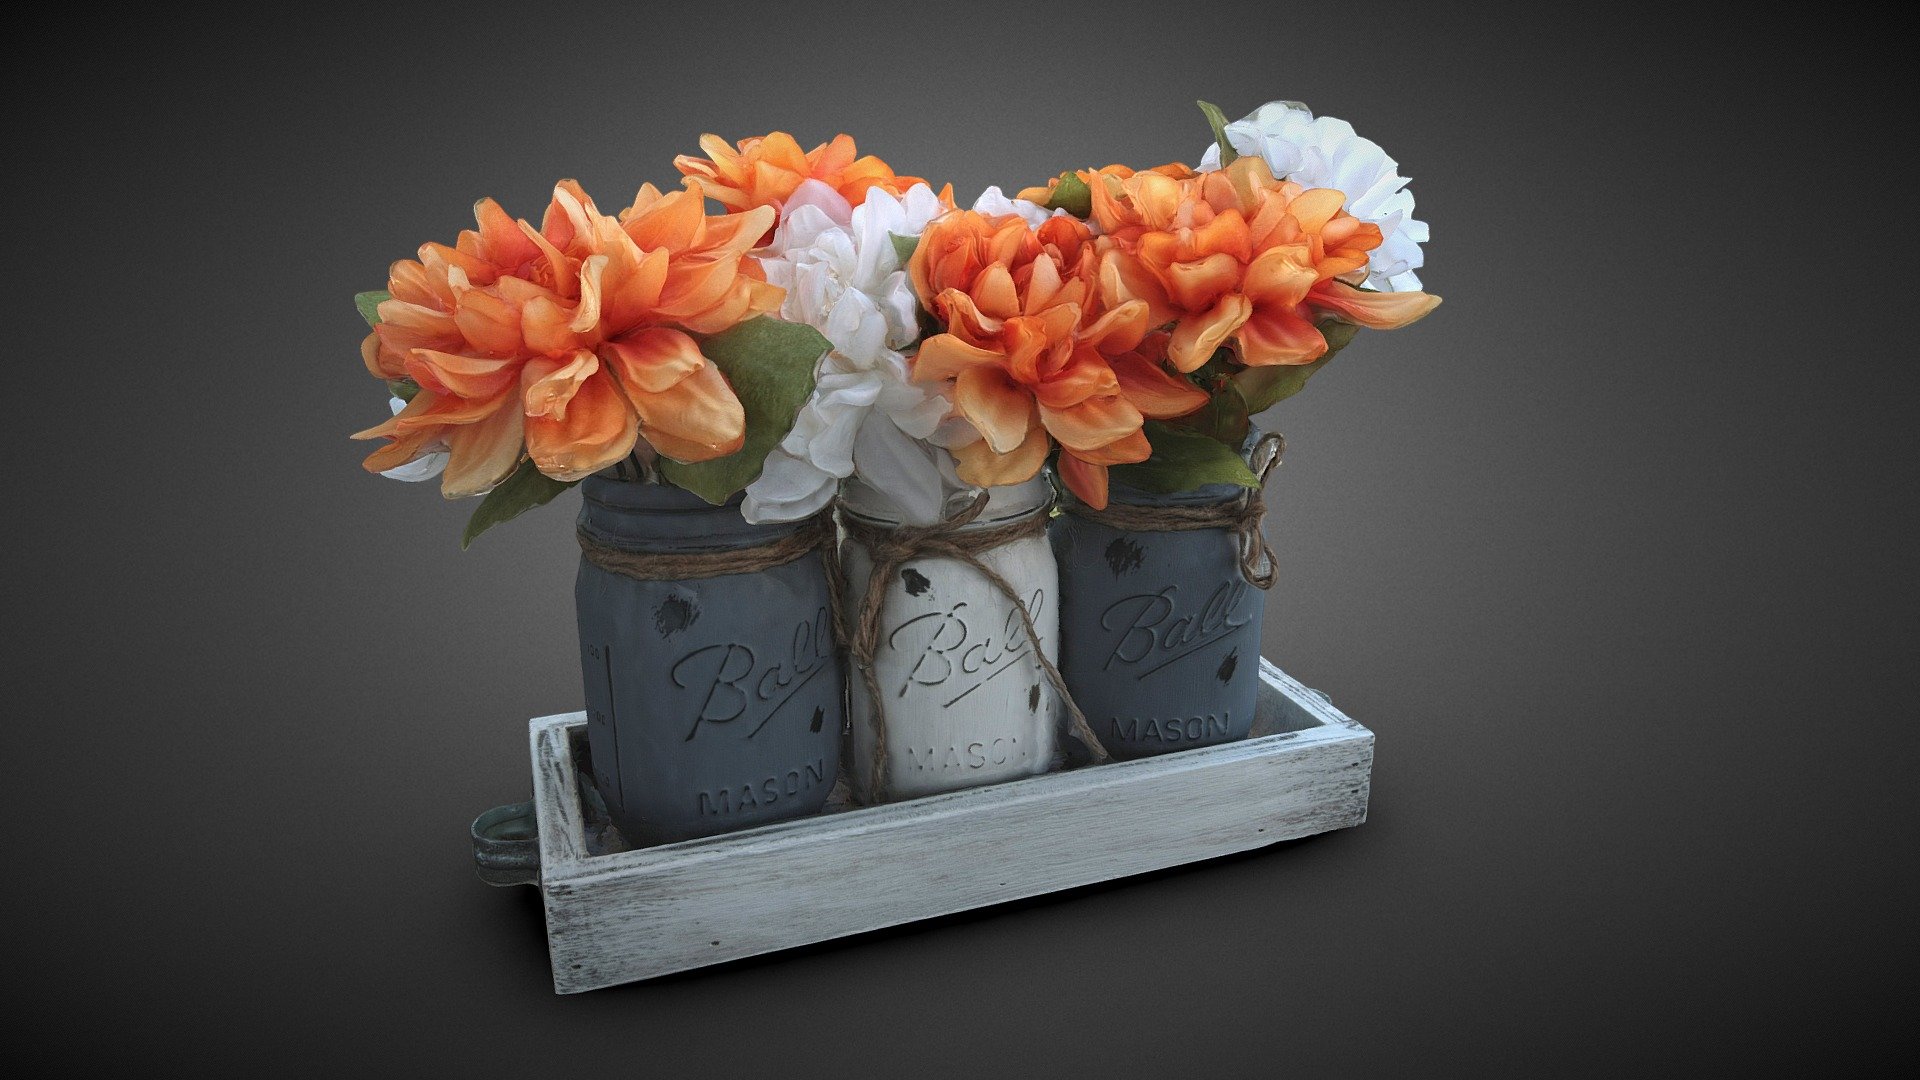 Decorative Mason Jars With Flowers